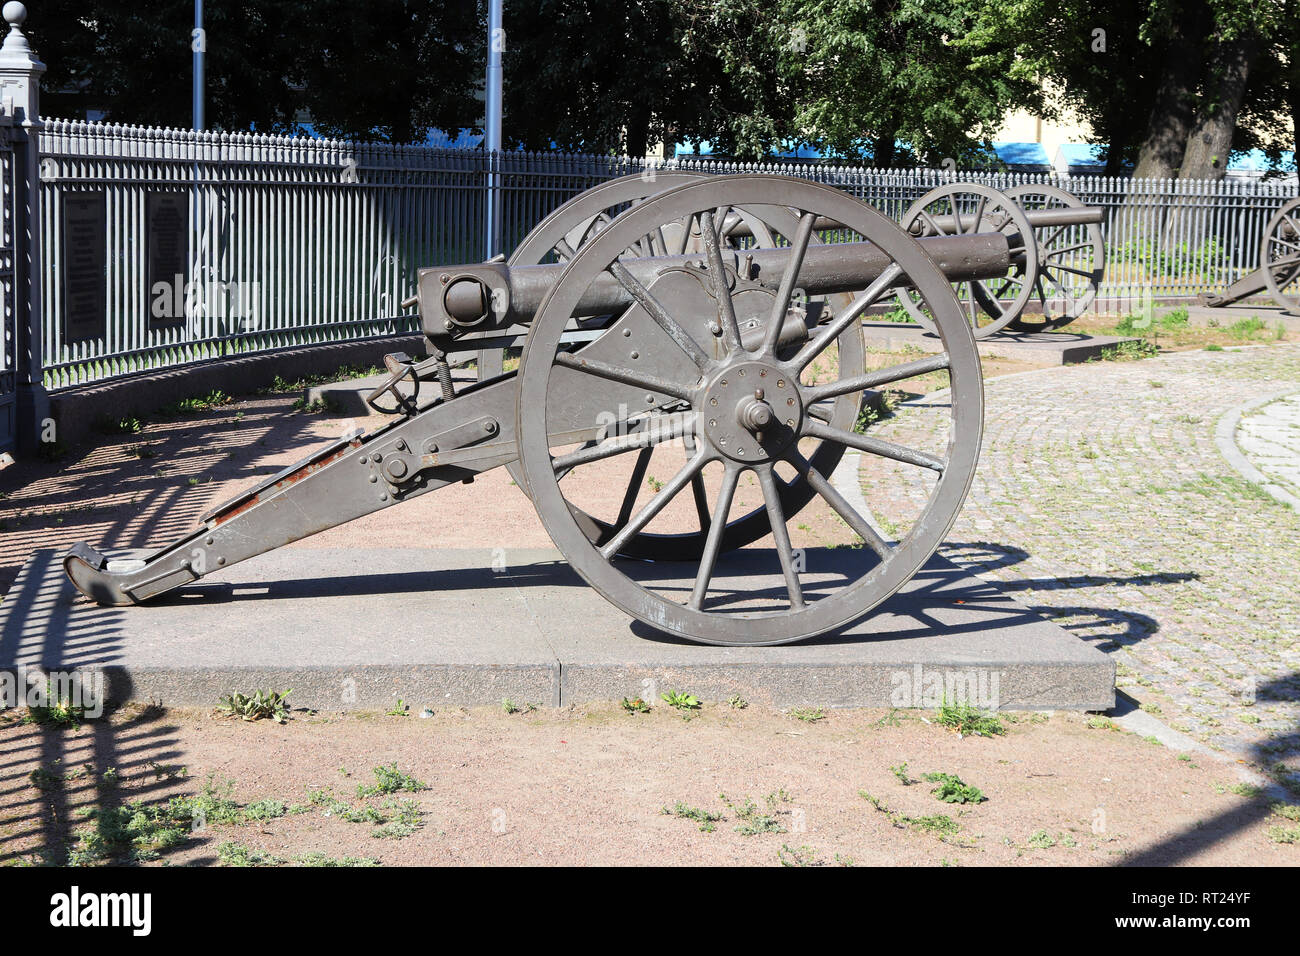 Artillery cannon on wheels Stock Photo